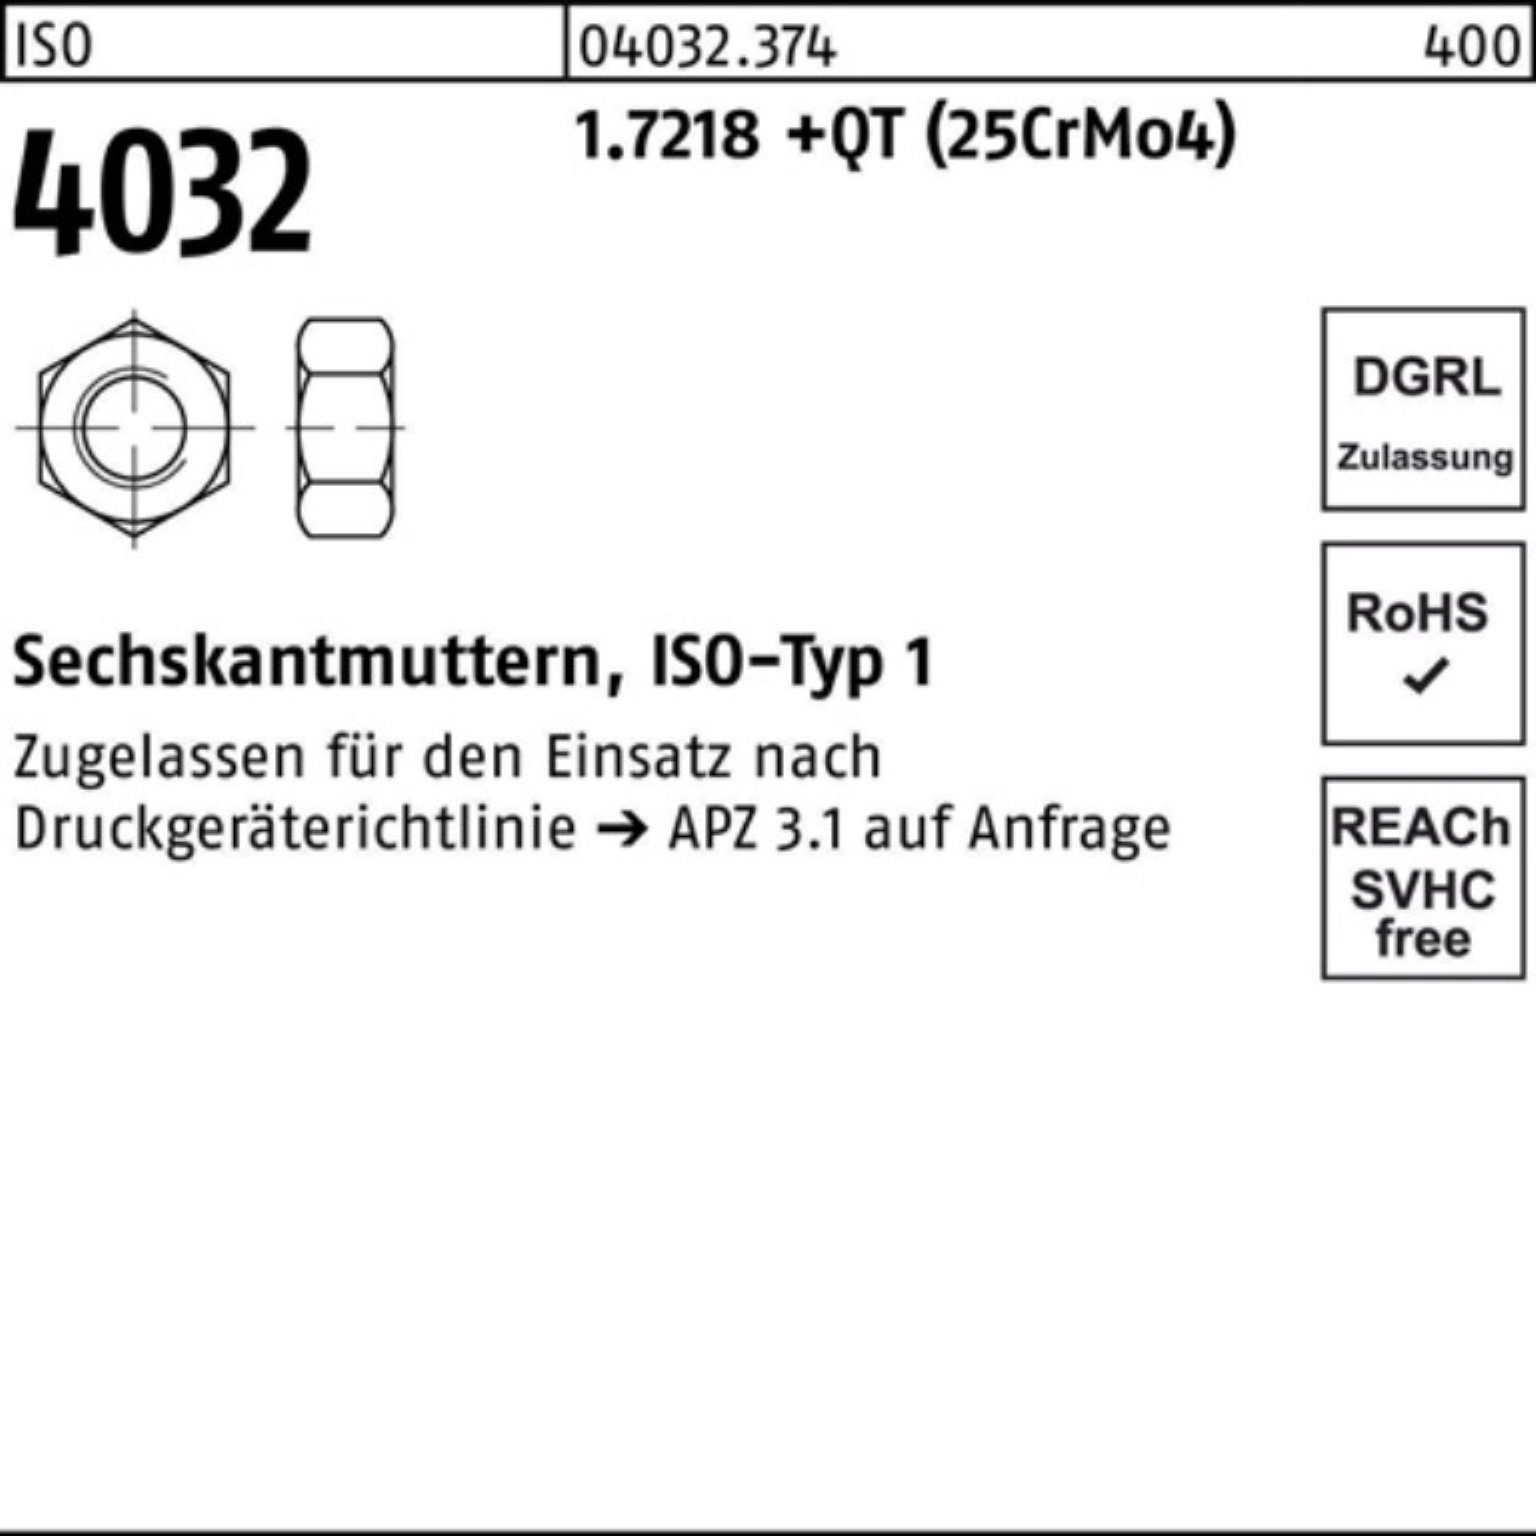 4032 M30 25 1.7218 Stück (25CrMo4) 100er Sechskantmutter Bufab +QT ISO Muttern Pack